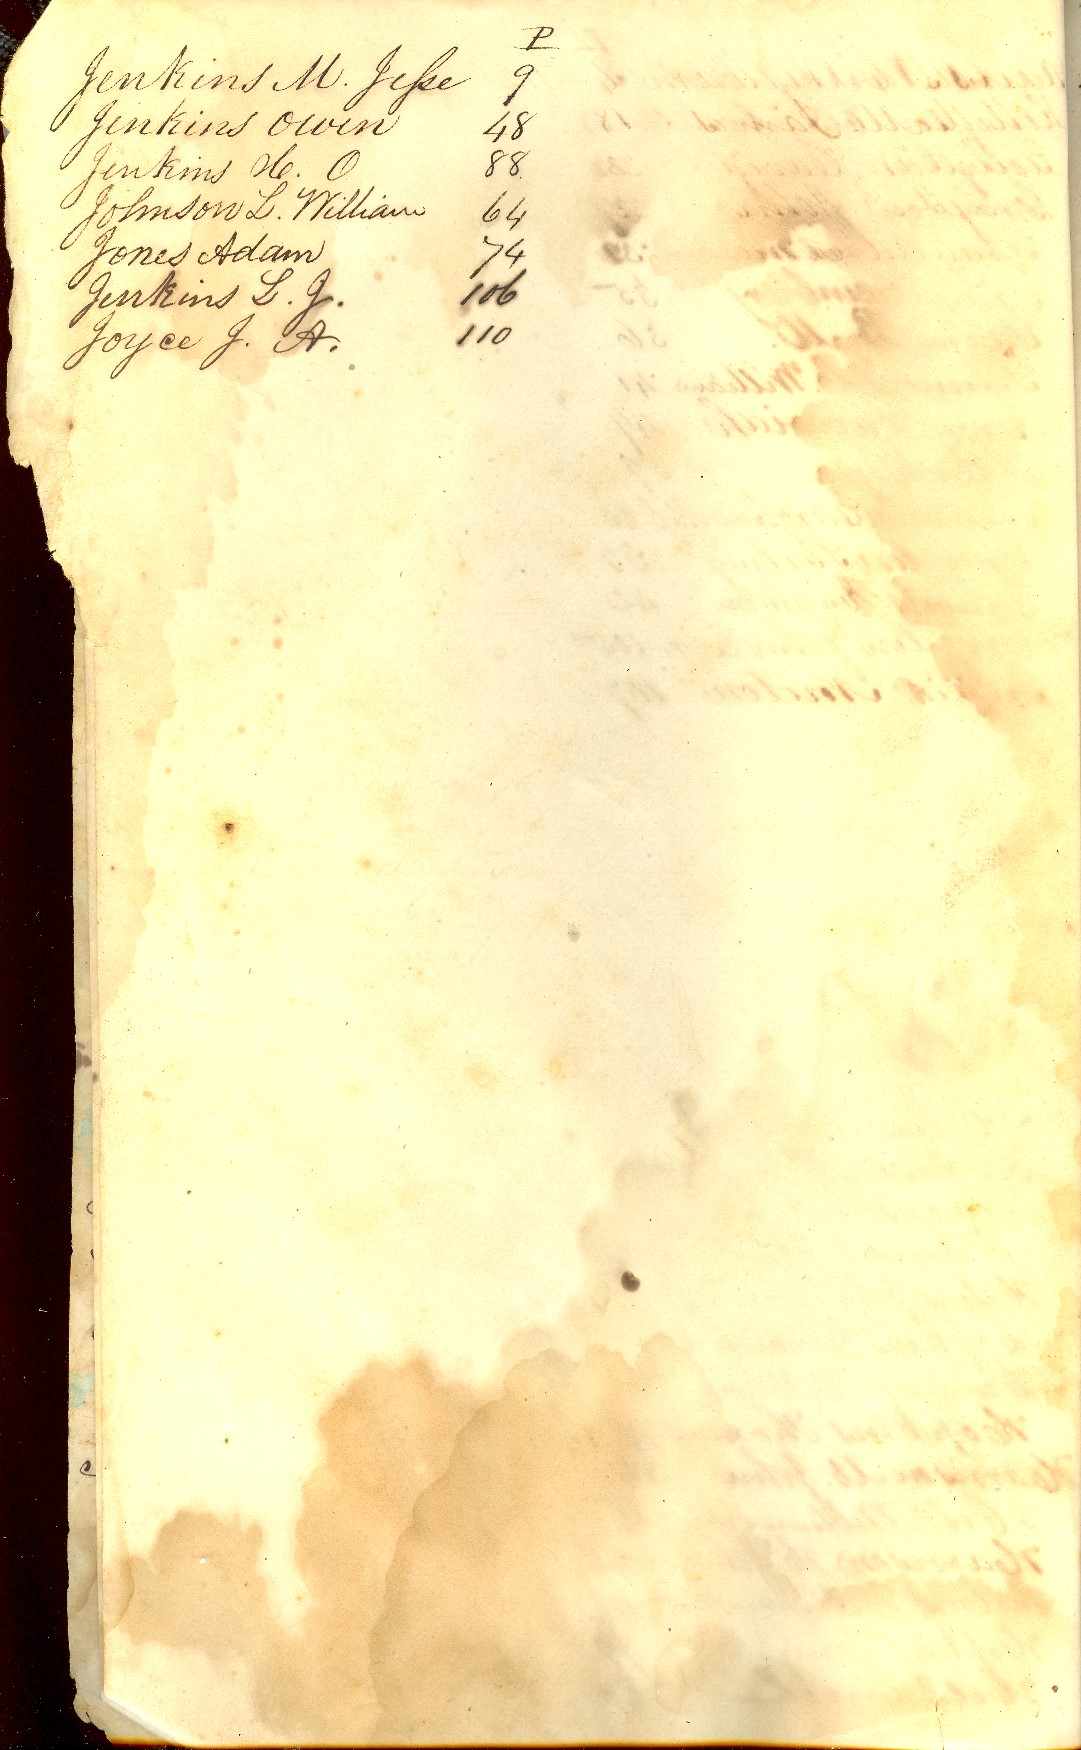 Bolling Store Ledger - 1844 Listing, p. 6